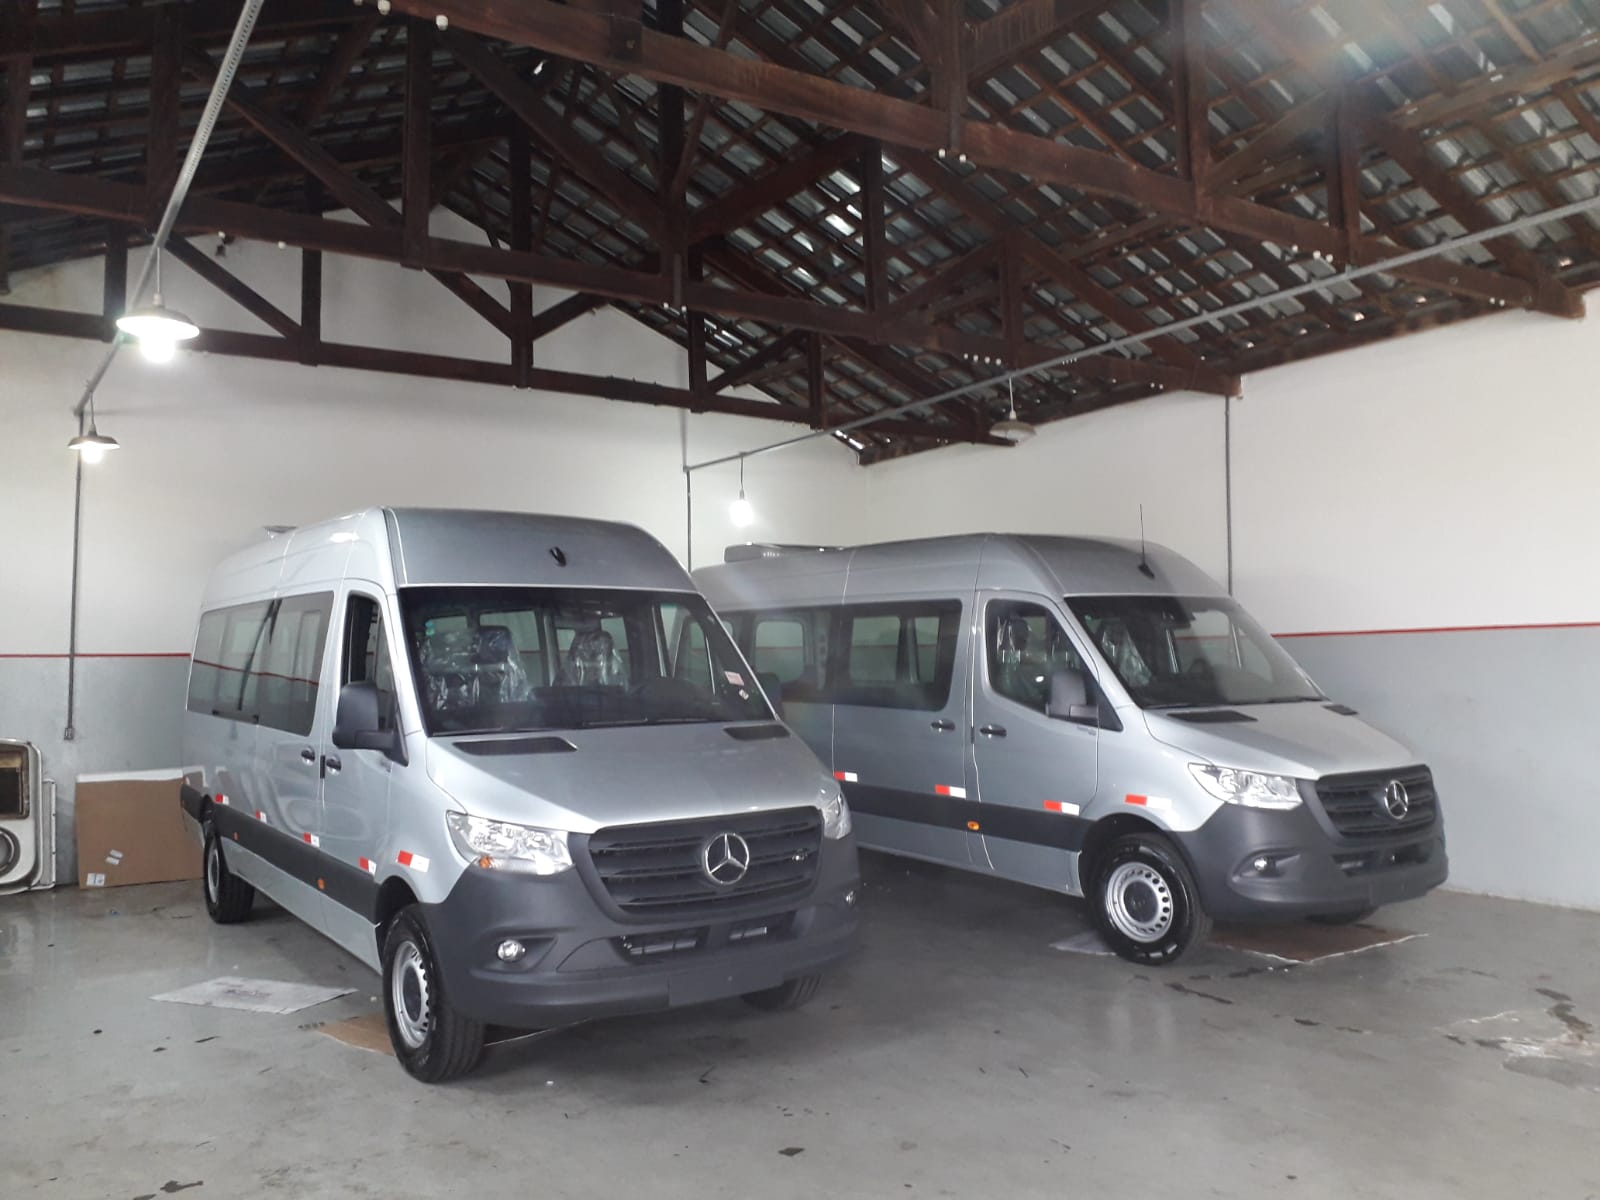 AC Vans Americana - Serviços ao cliente - AC Vans